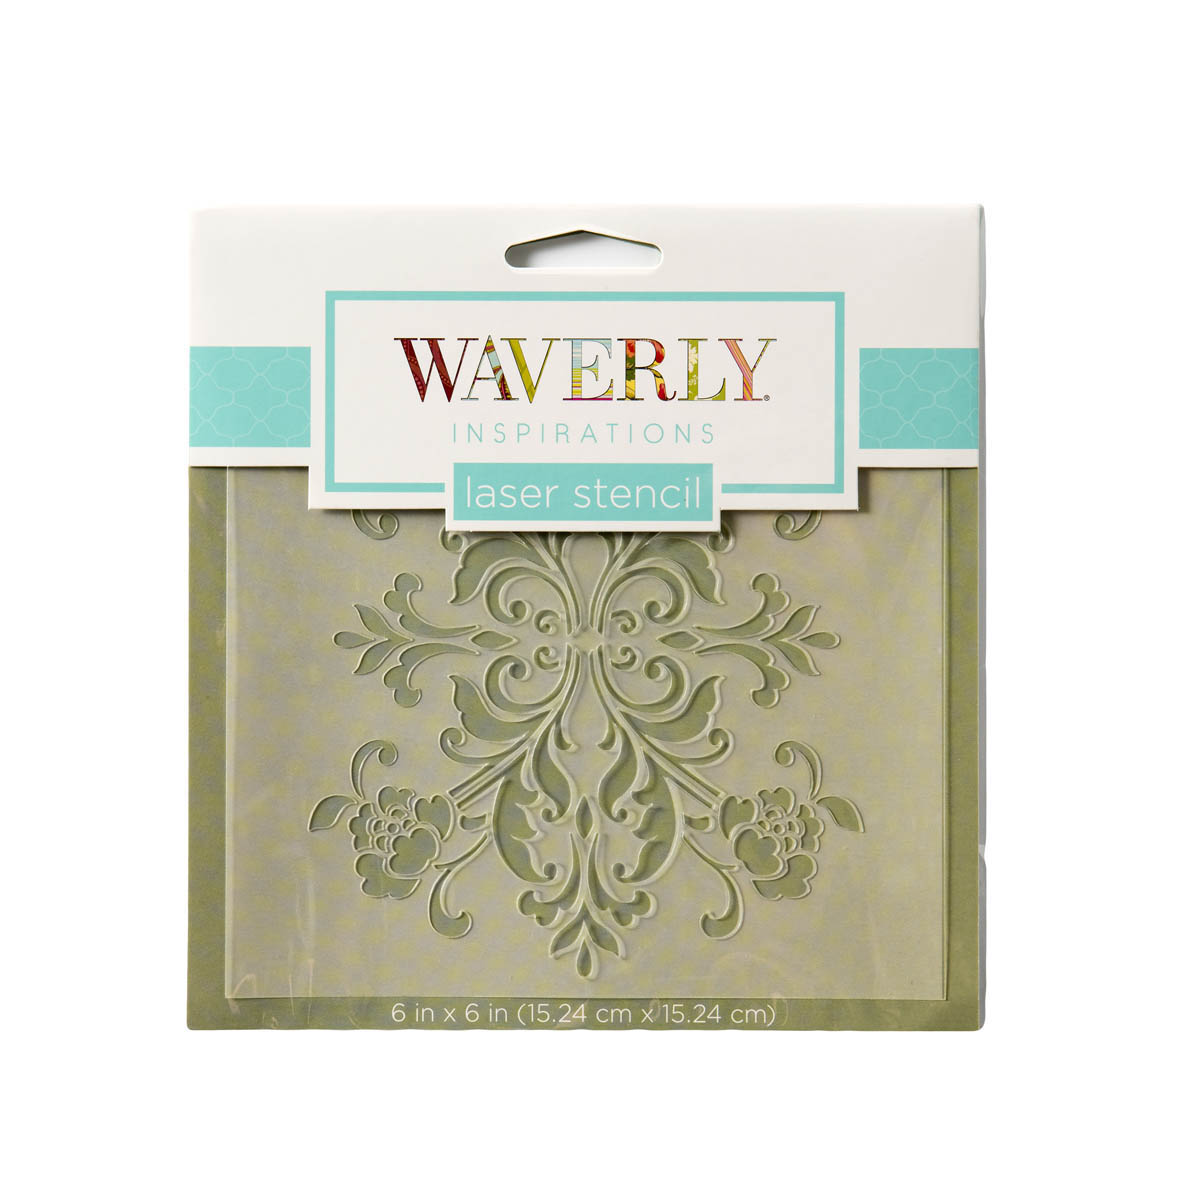 Waverly ® Inspirations Laser Stencils - Accent - Damask Floral, 6